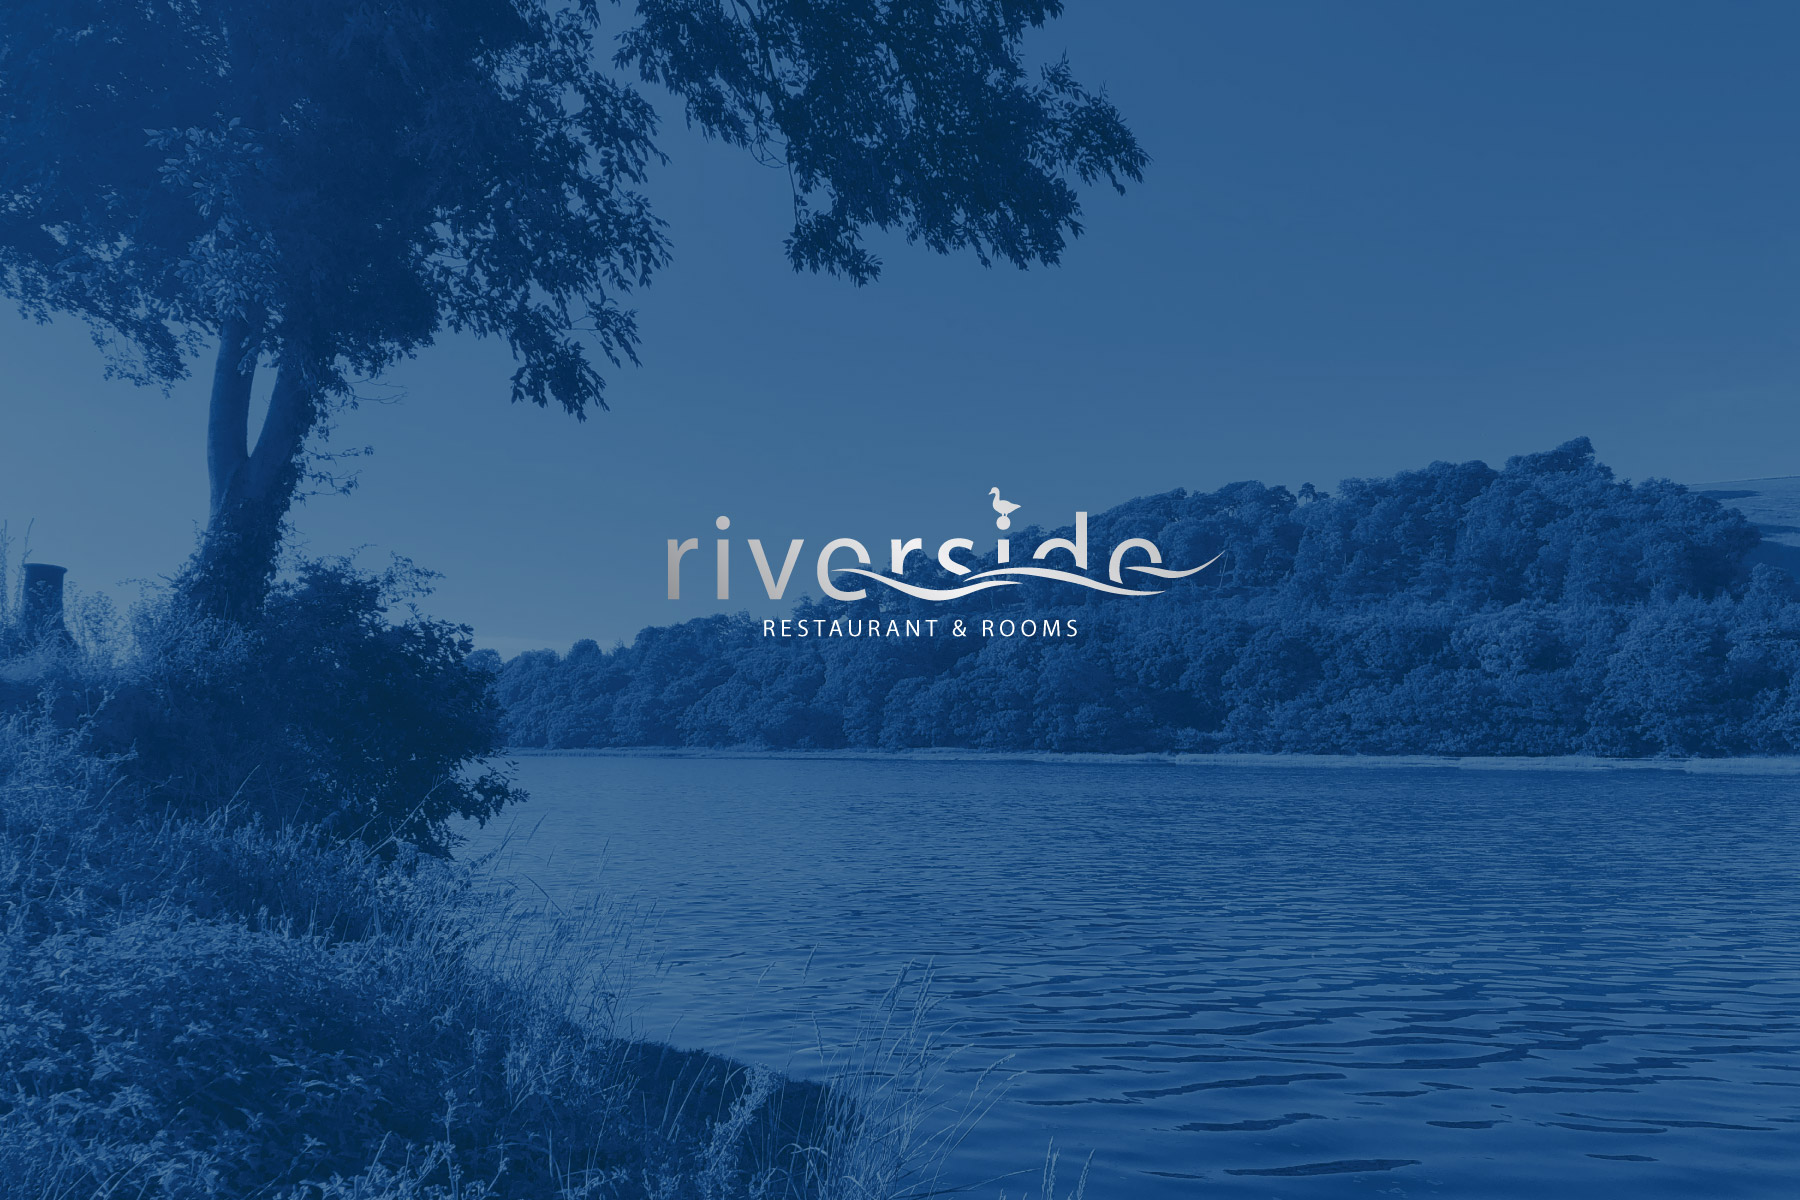 riverside restaurant logo and river background